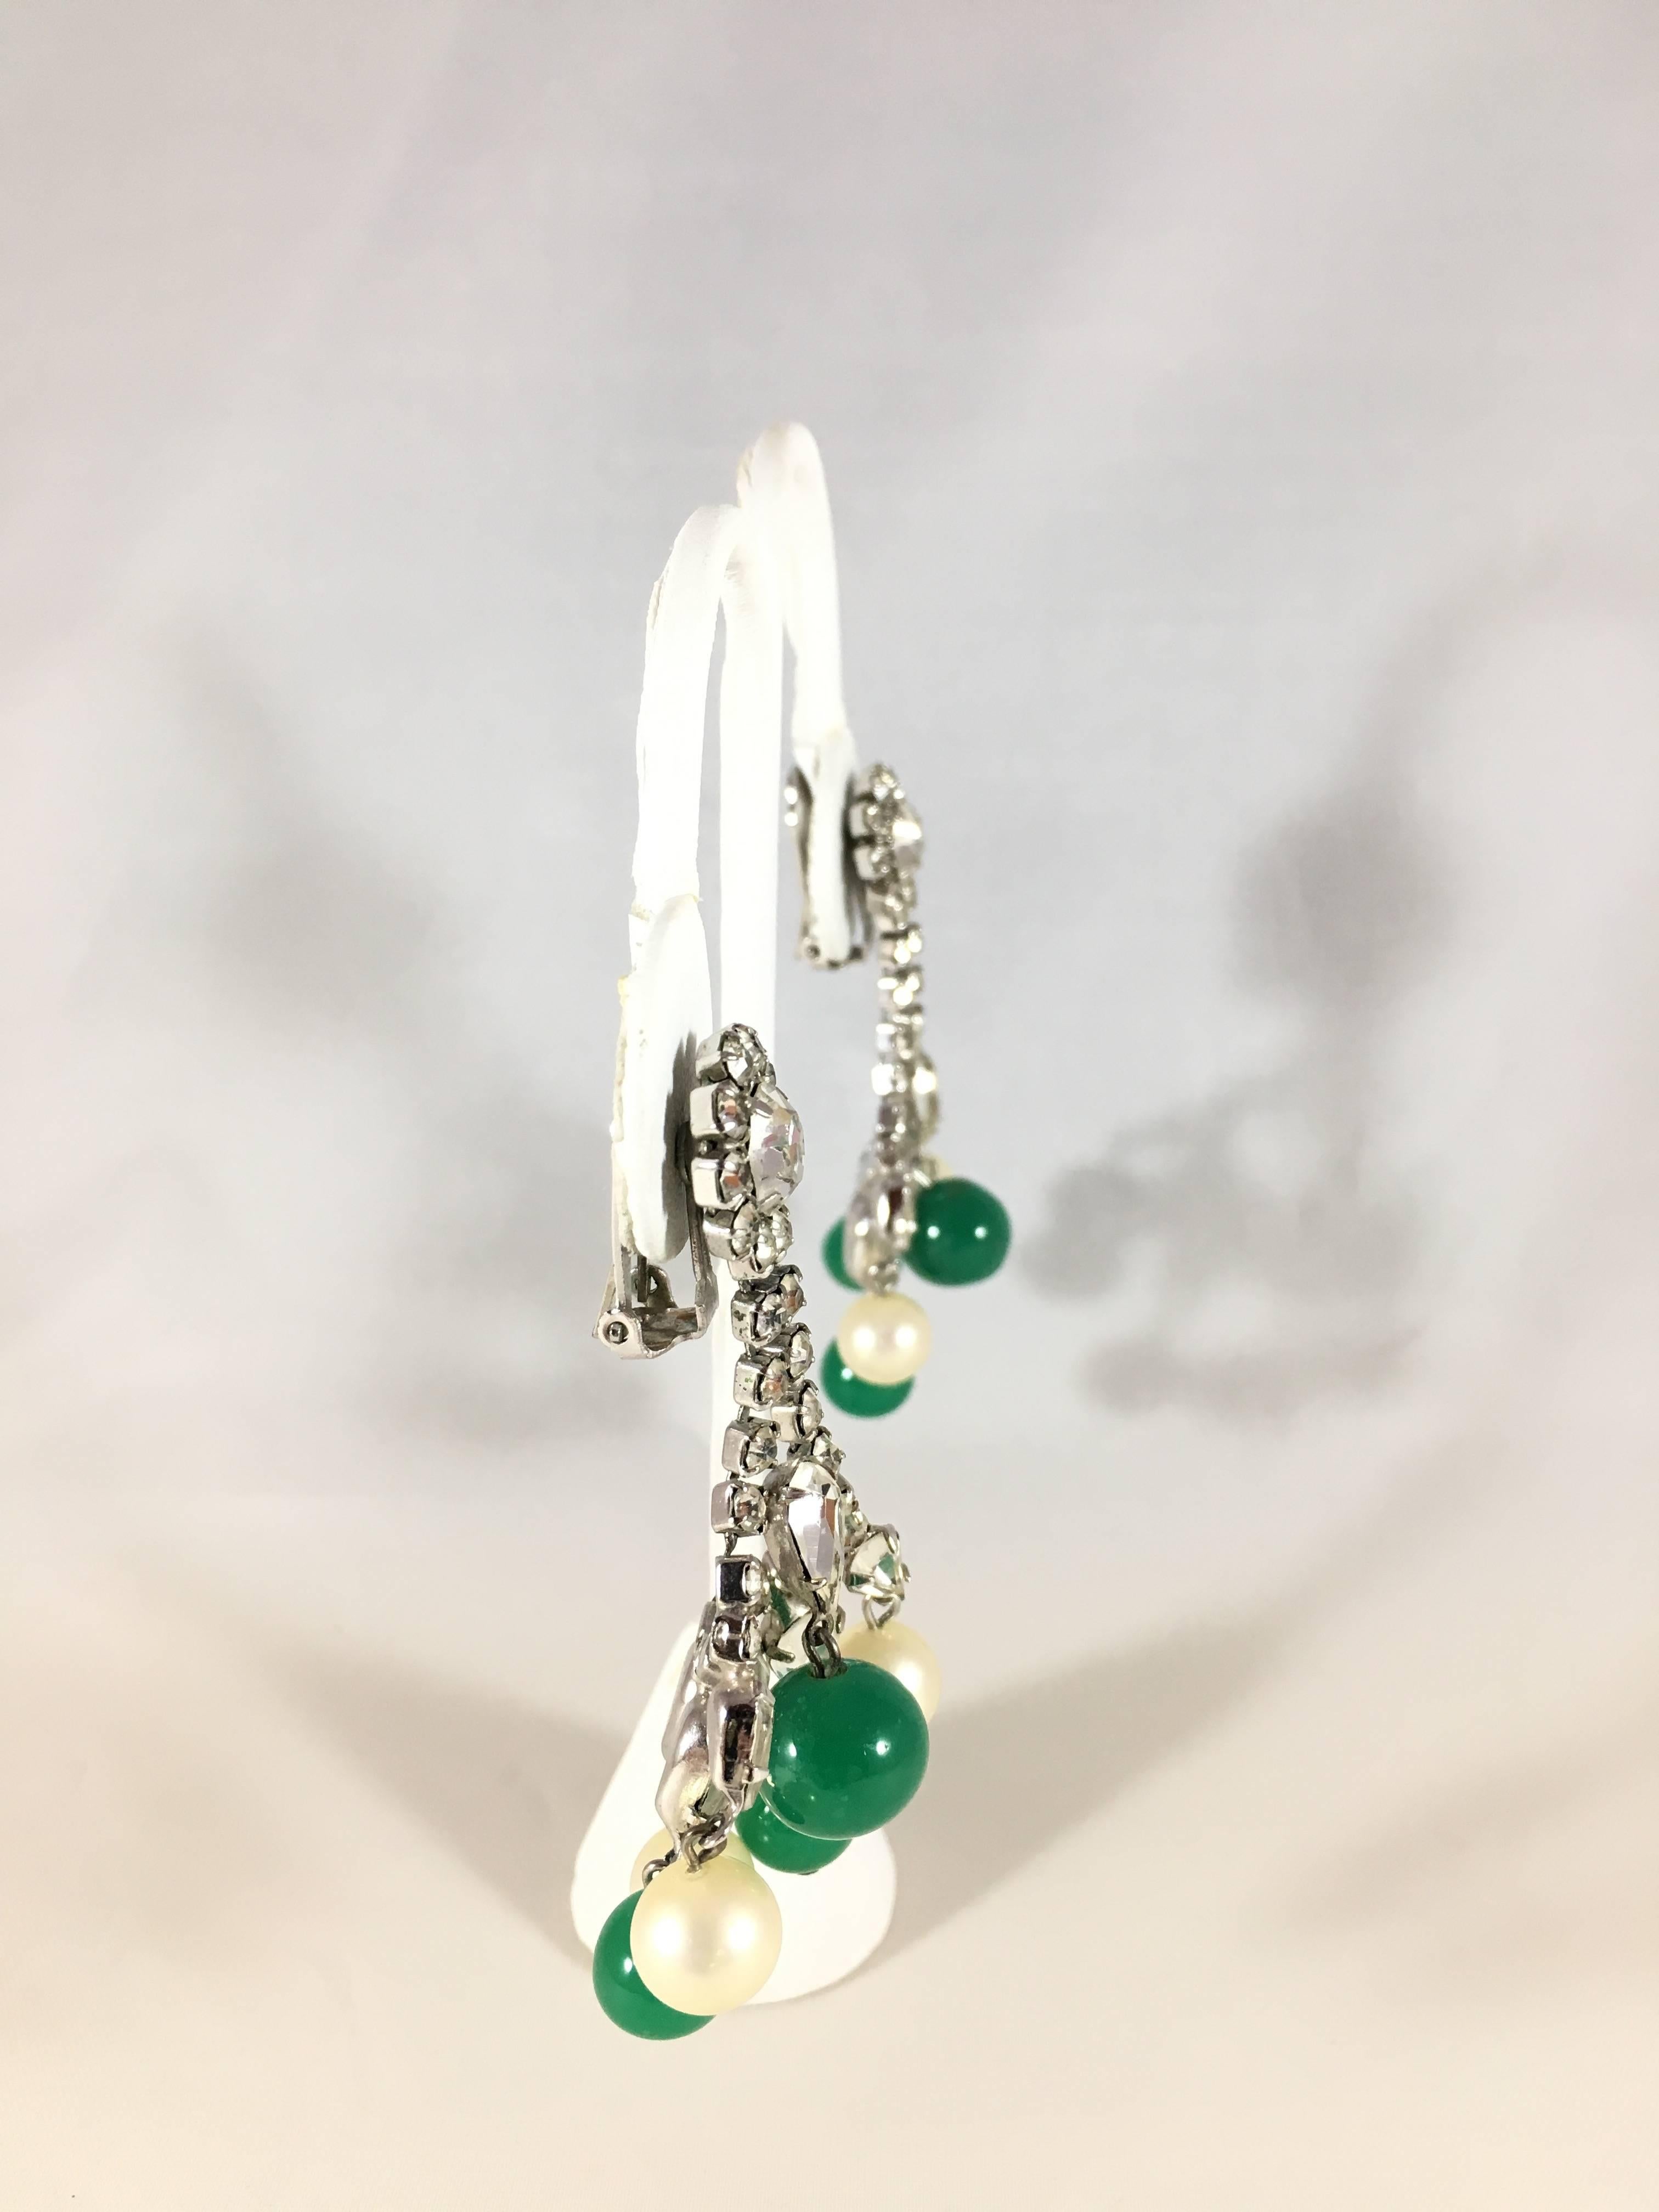 Hattie Carnegie 60s Chandelier Earrings with Rhinestones, Pearls and Emeralds For Sale 2